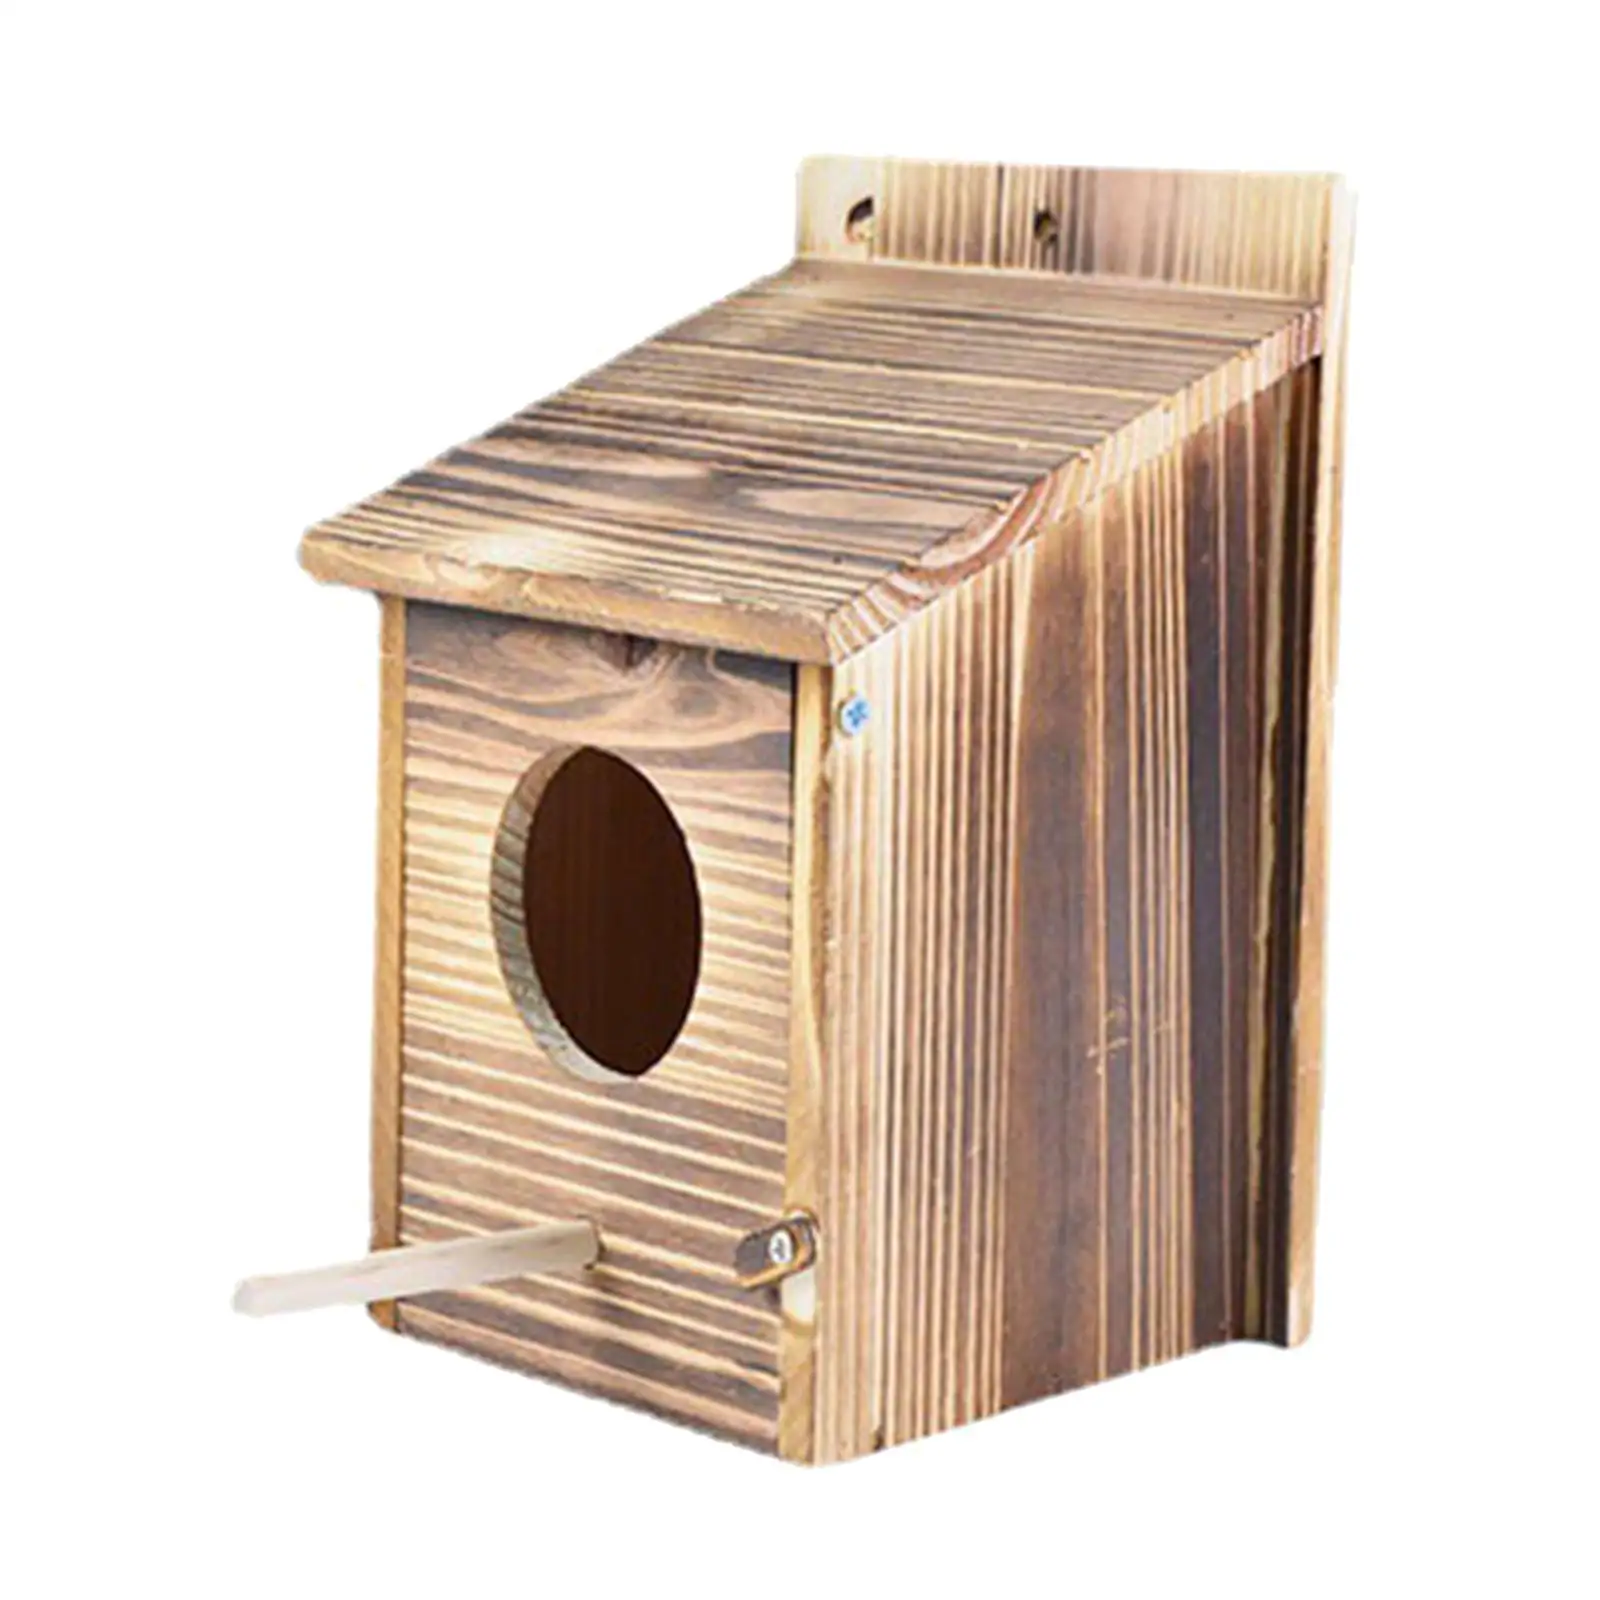 Wooden Bird Nest Box Bird House for Sparrows Great Robin – Ready Assembled